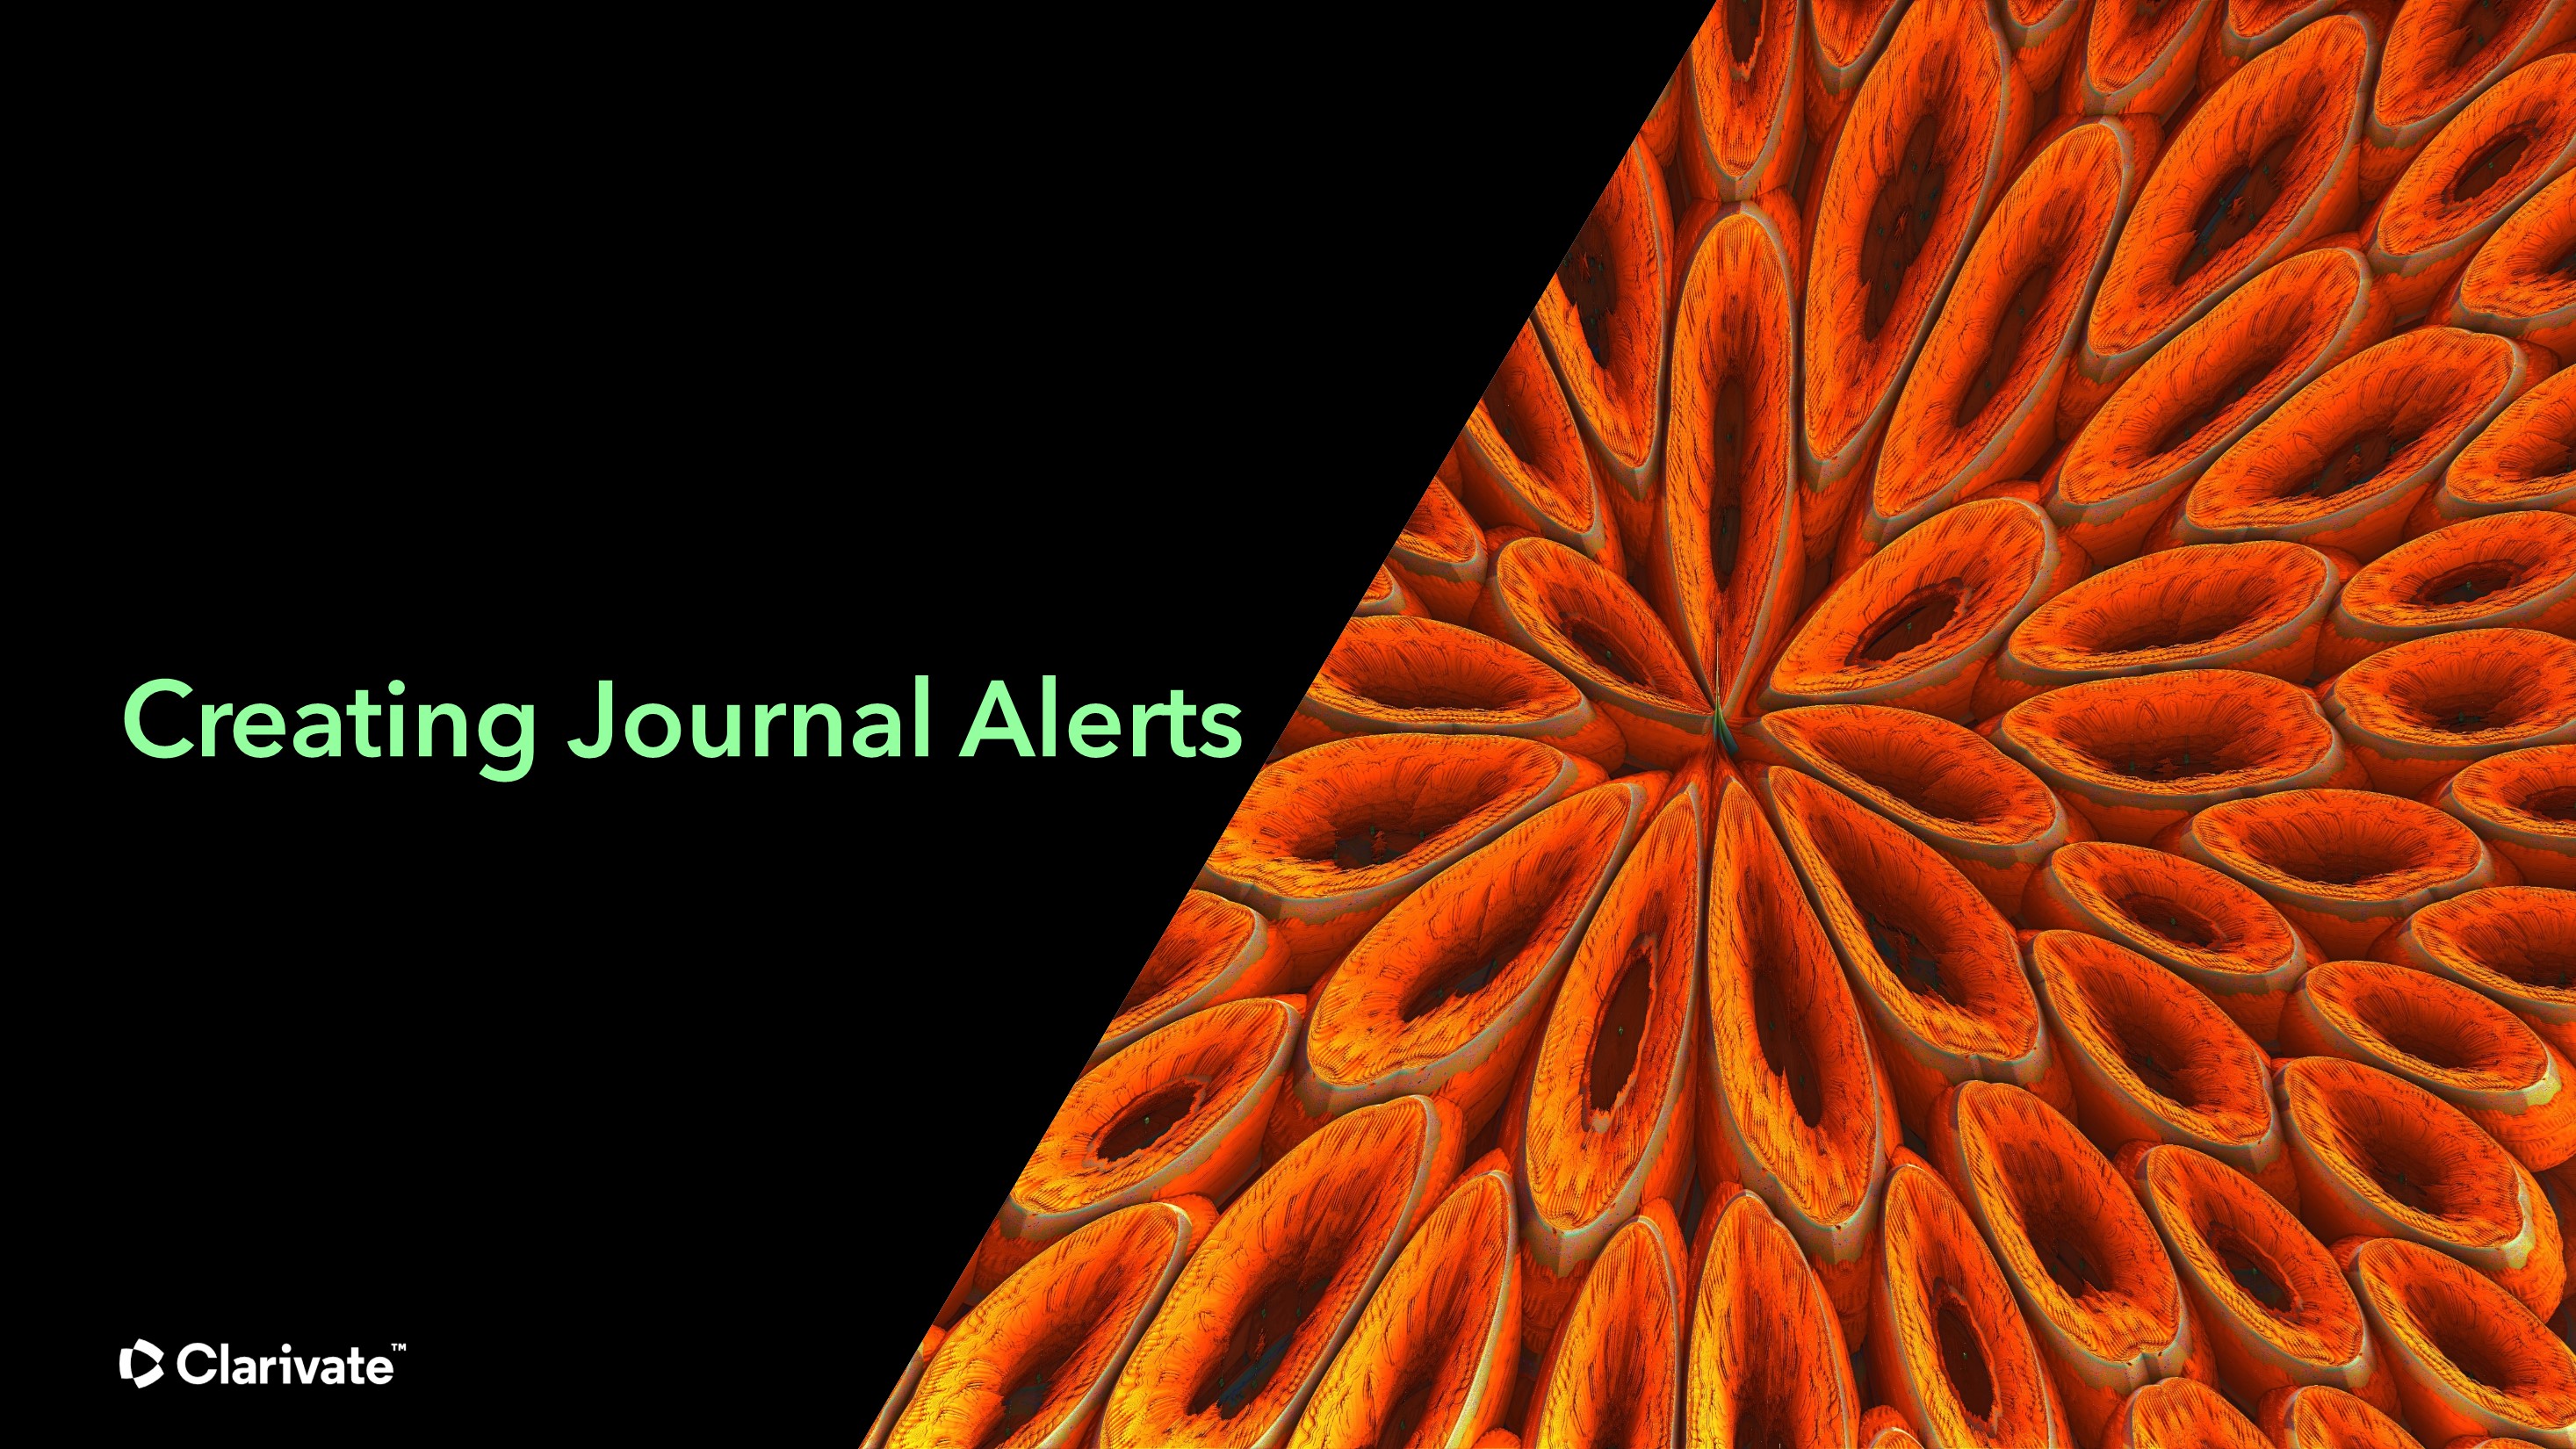 Create journal alerts video